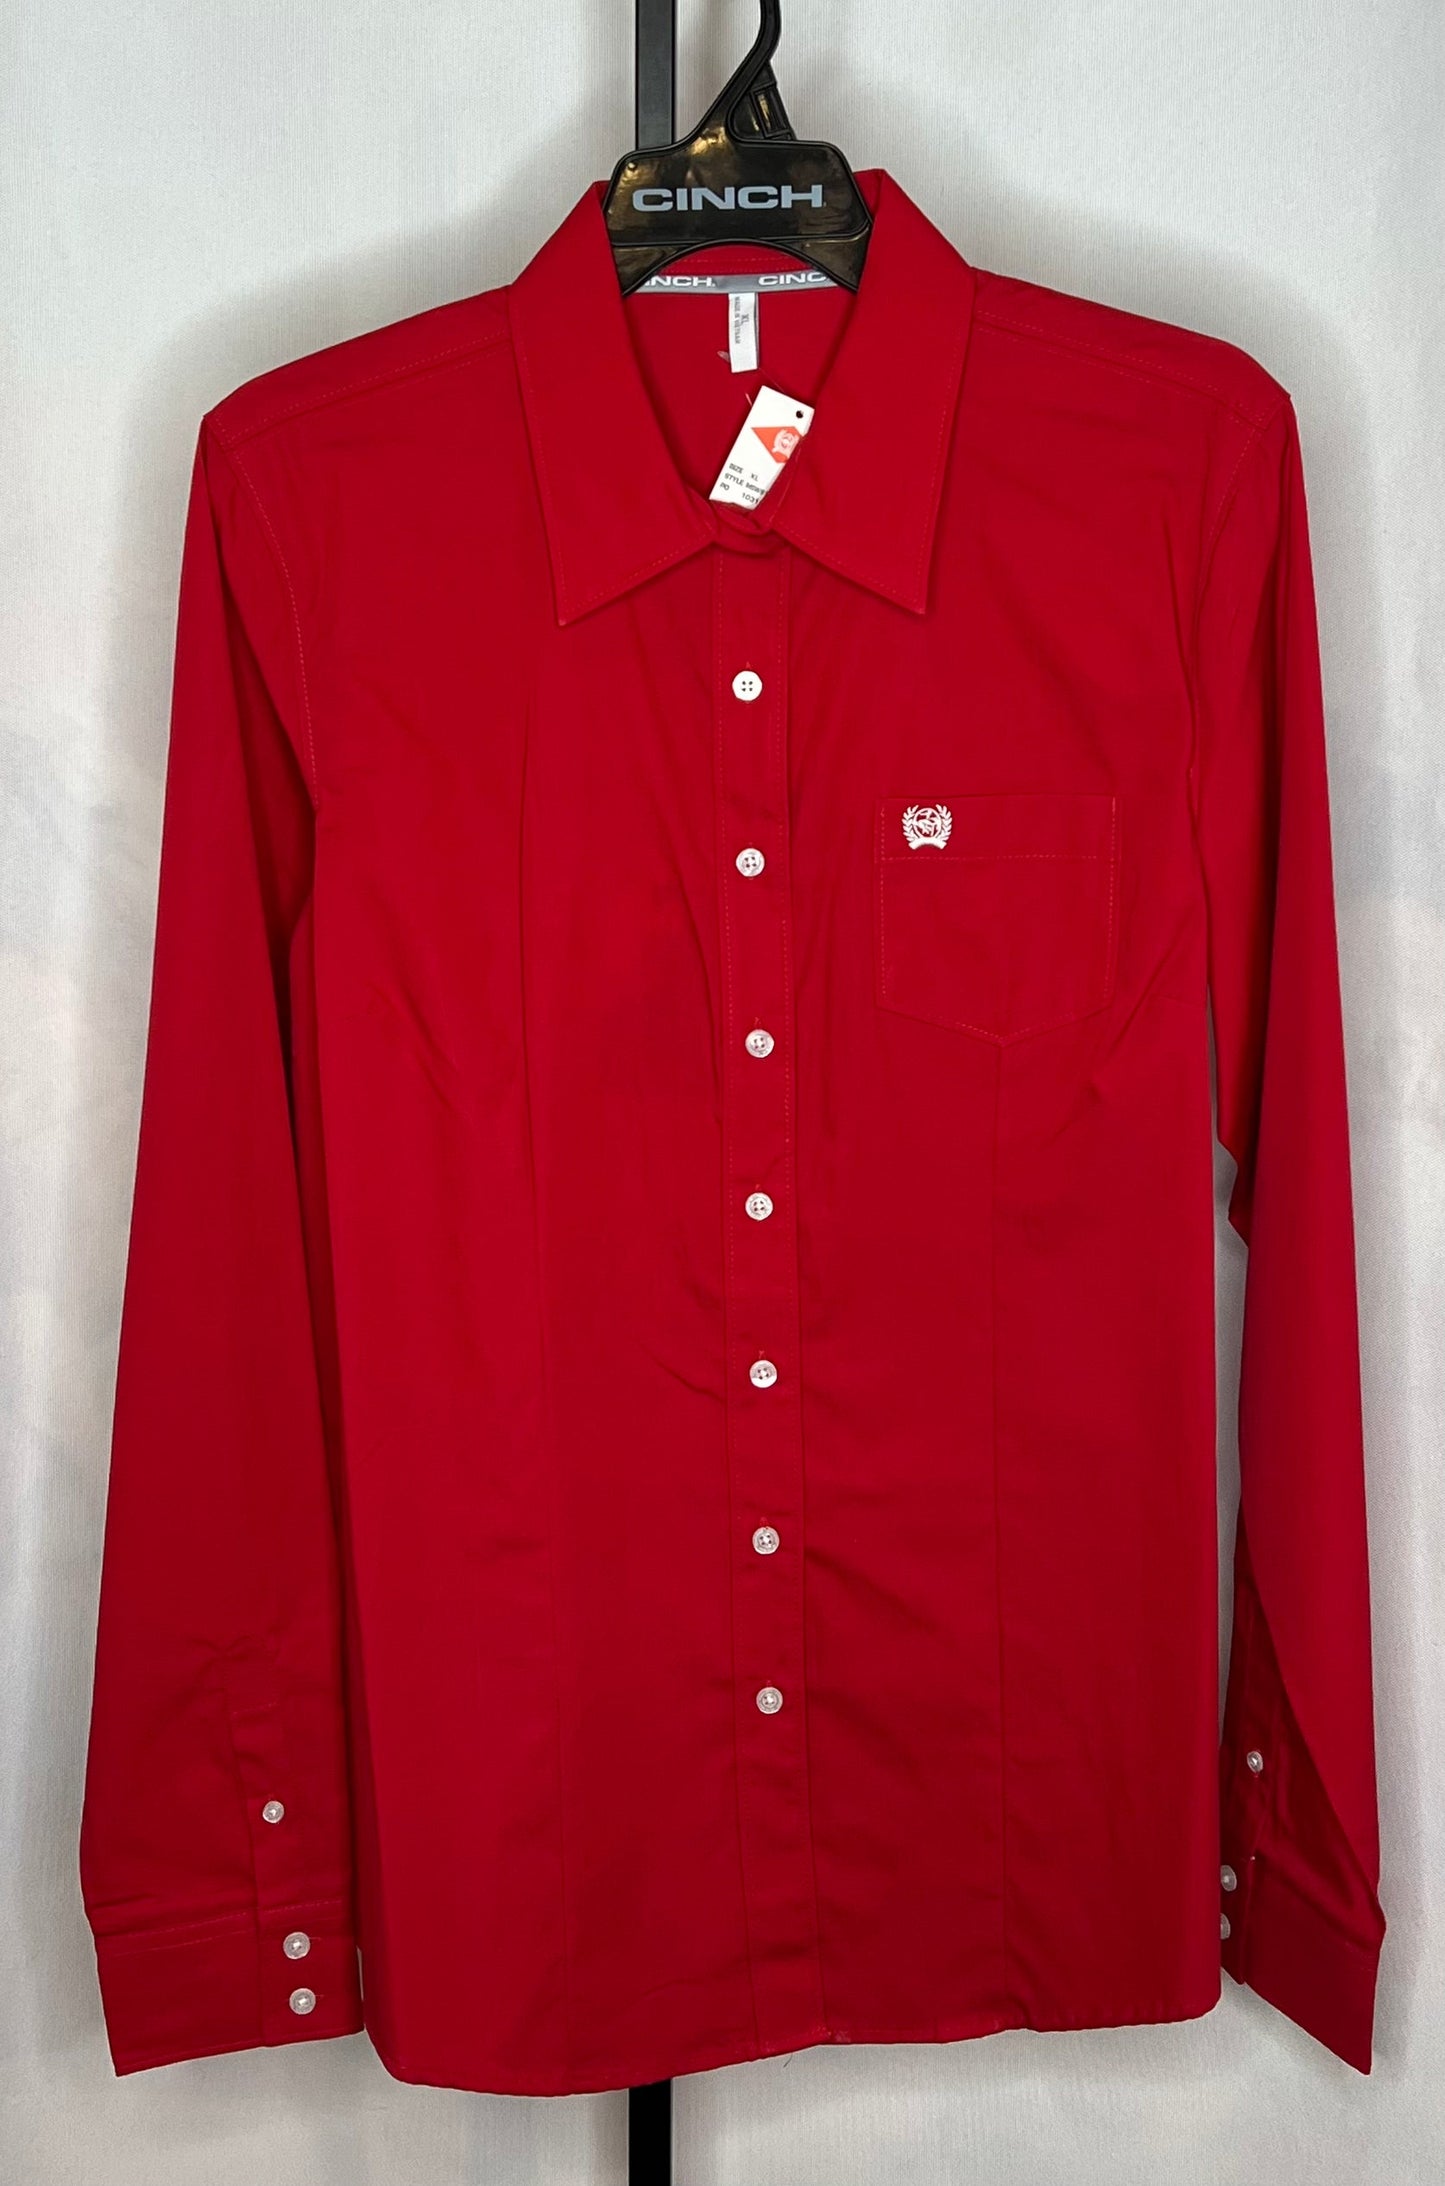 Women’s Cinch Red Button Down Shirt